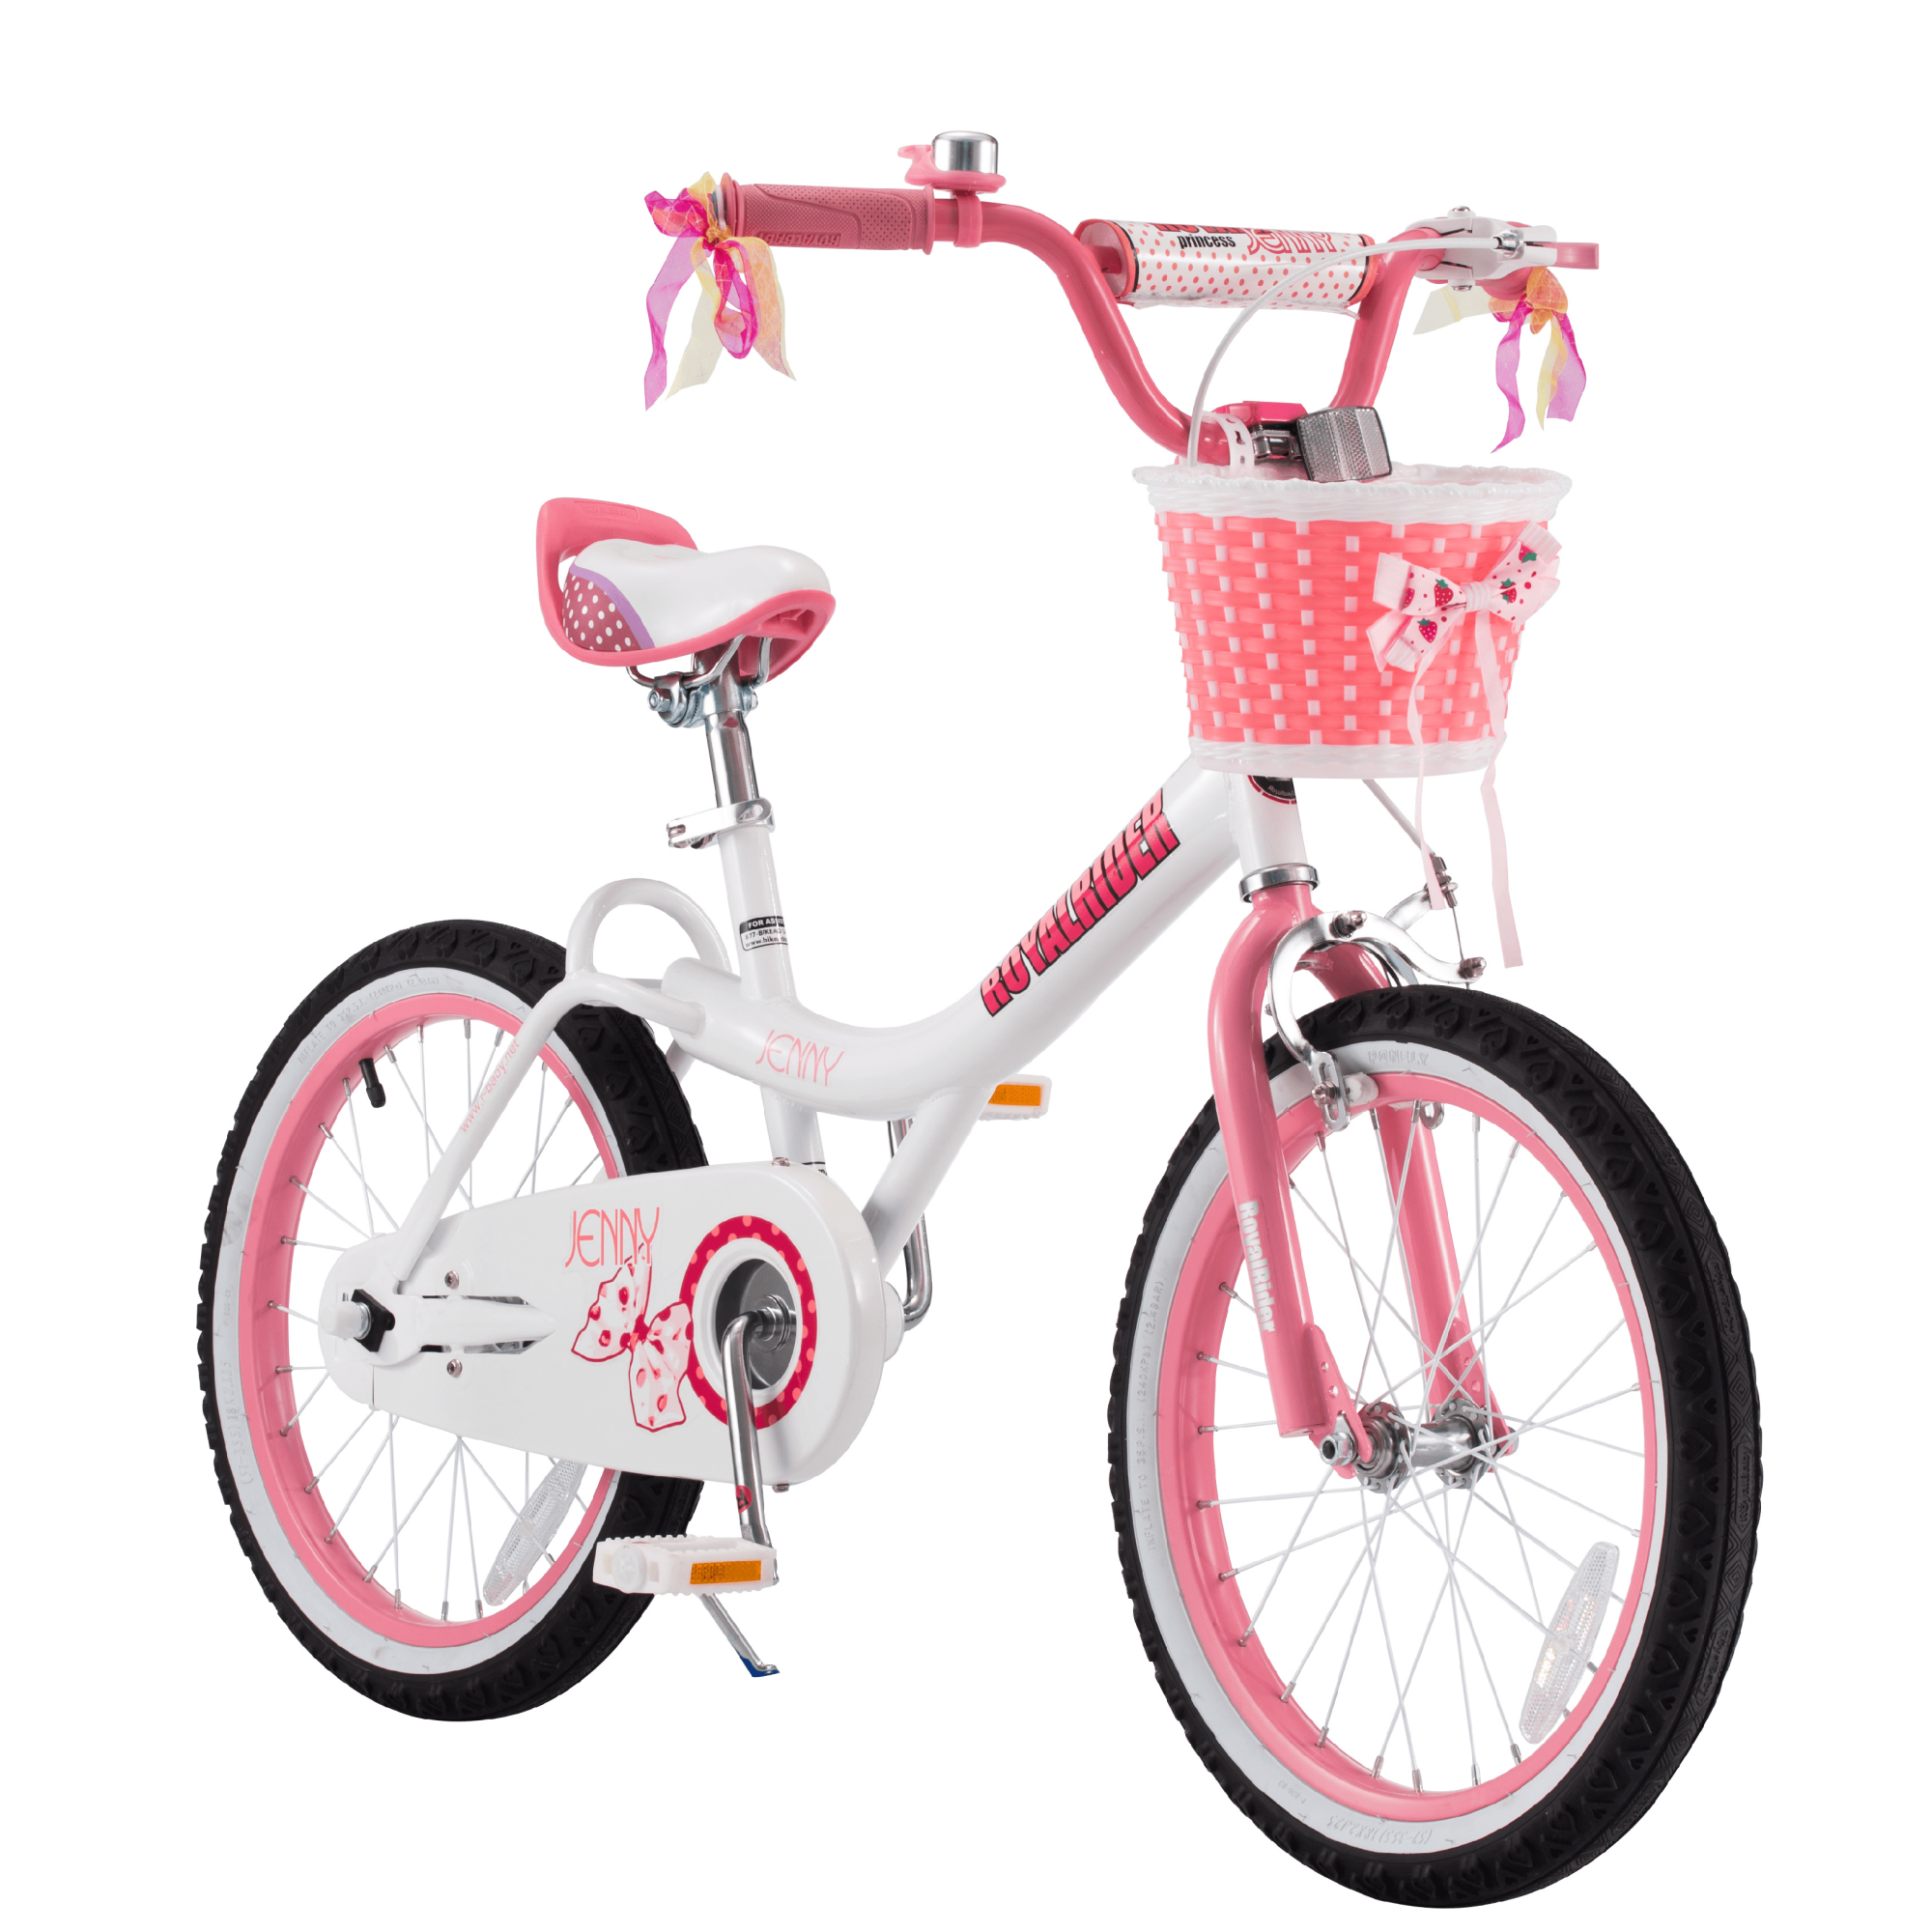 RoyalBaby Jenny Princess 18 inch Girl's bike, White & Pink